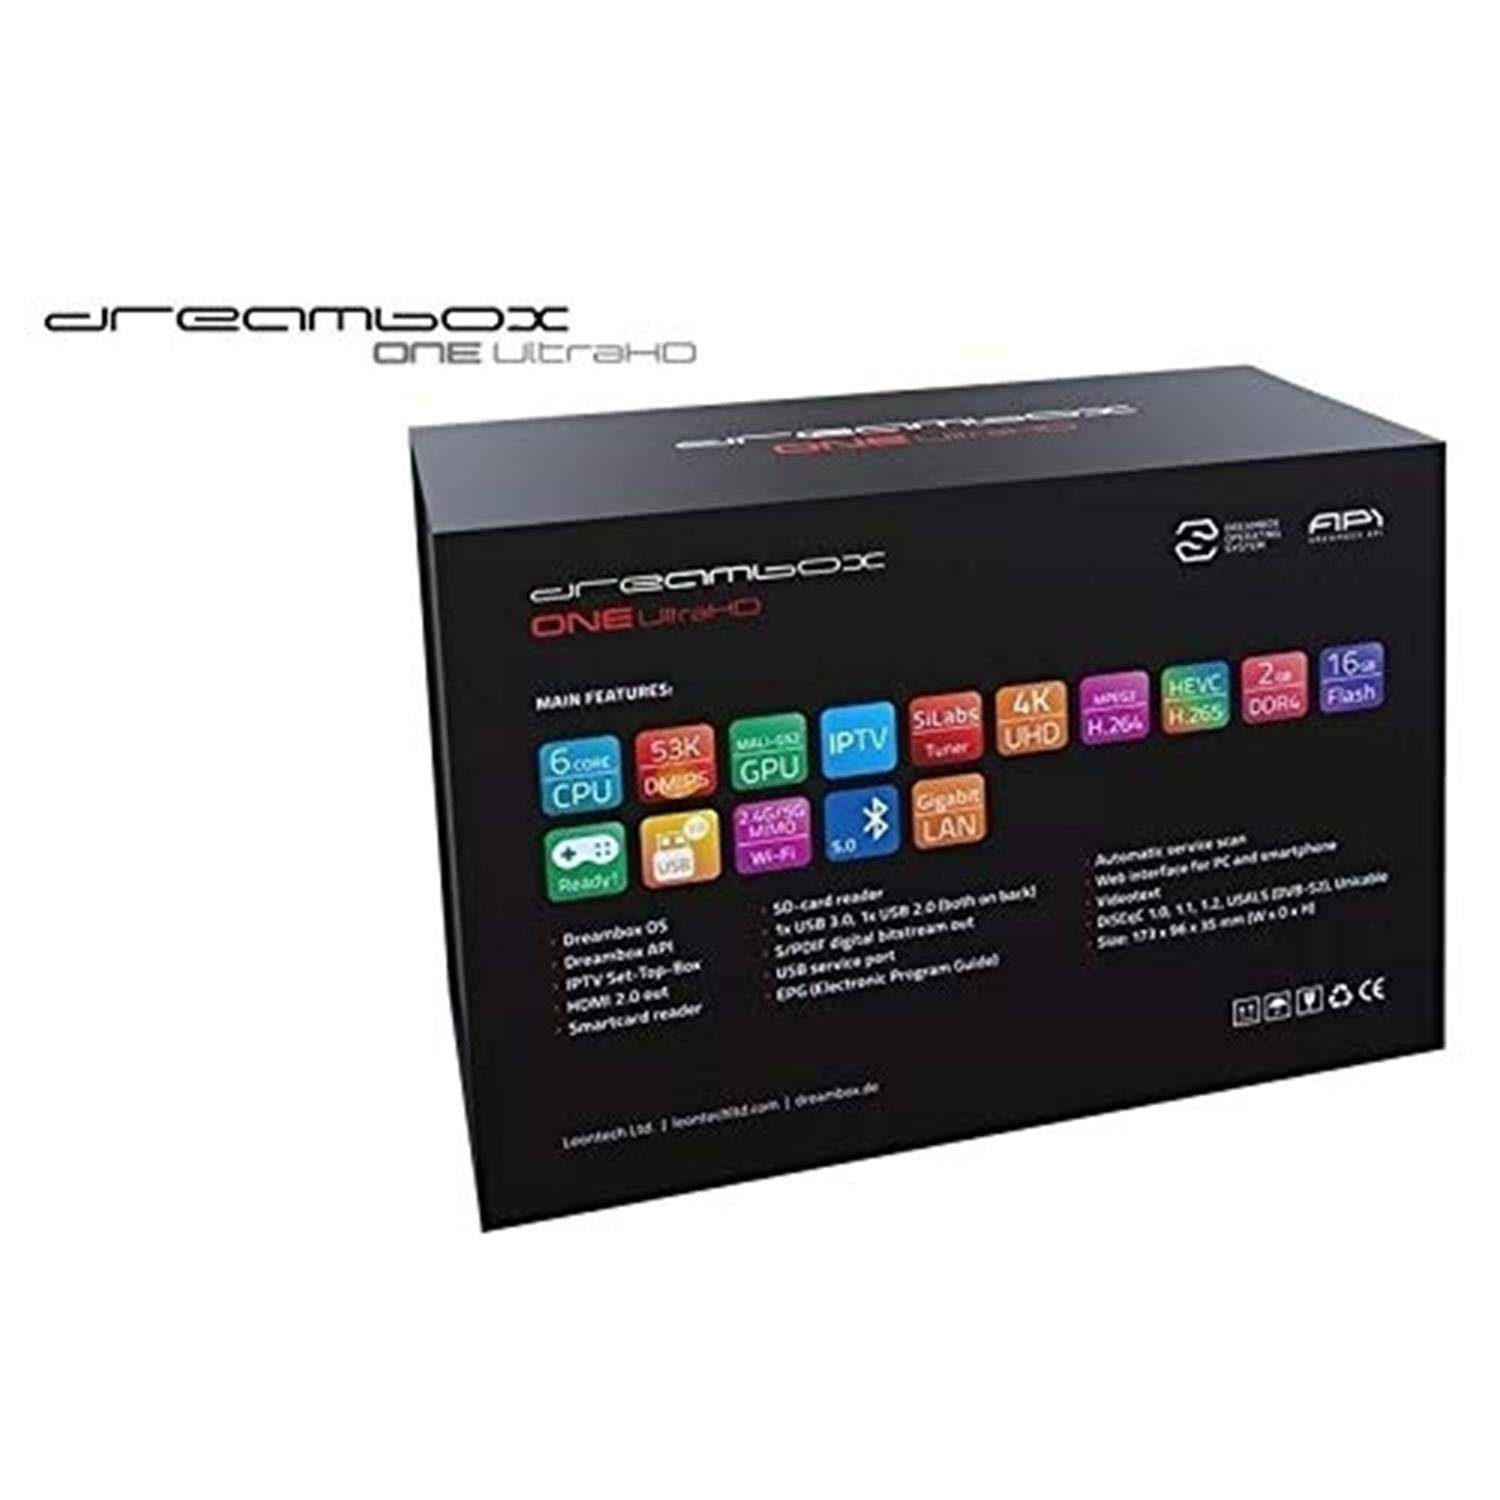 Dreambox Dreambox One Ultra Tuner 2160p, HD E2 Multistream Satellitenreceiver DVB-S2X 2x (4K